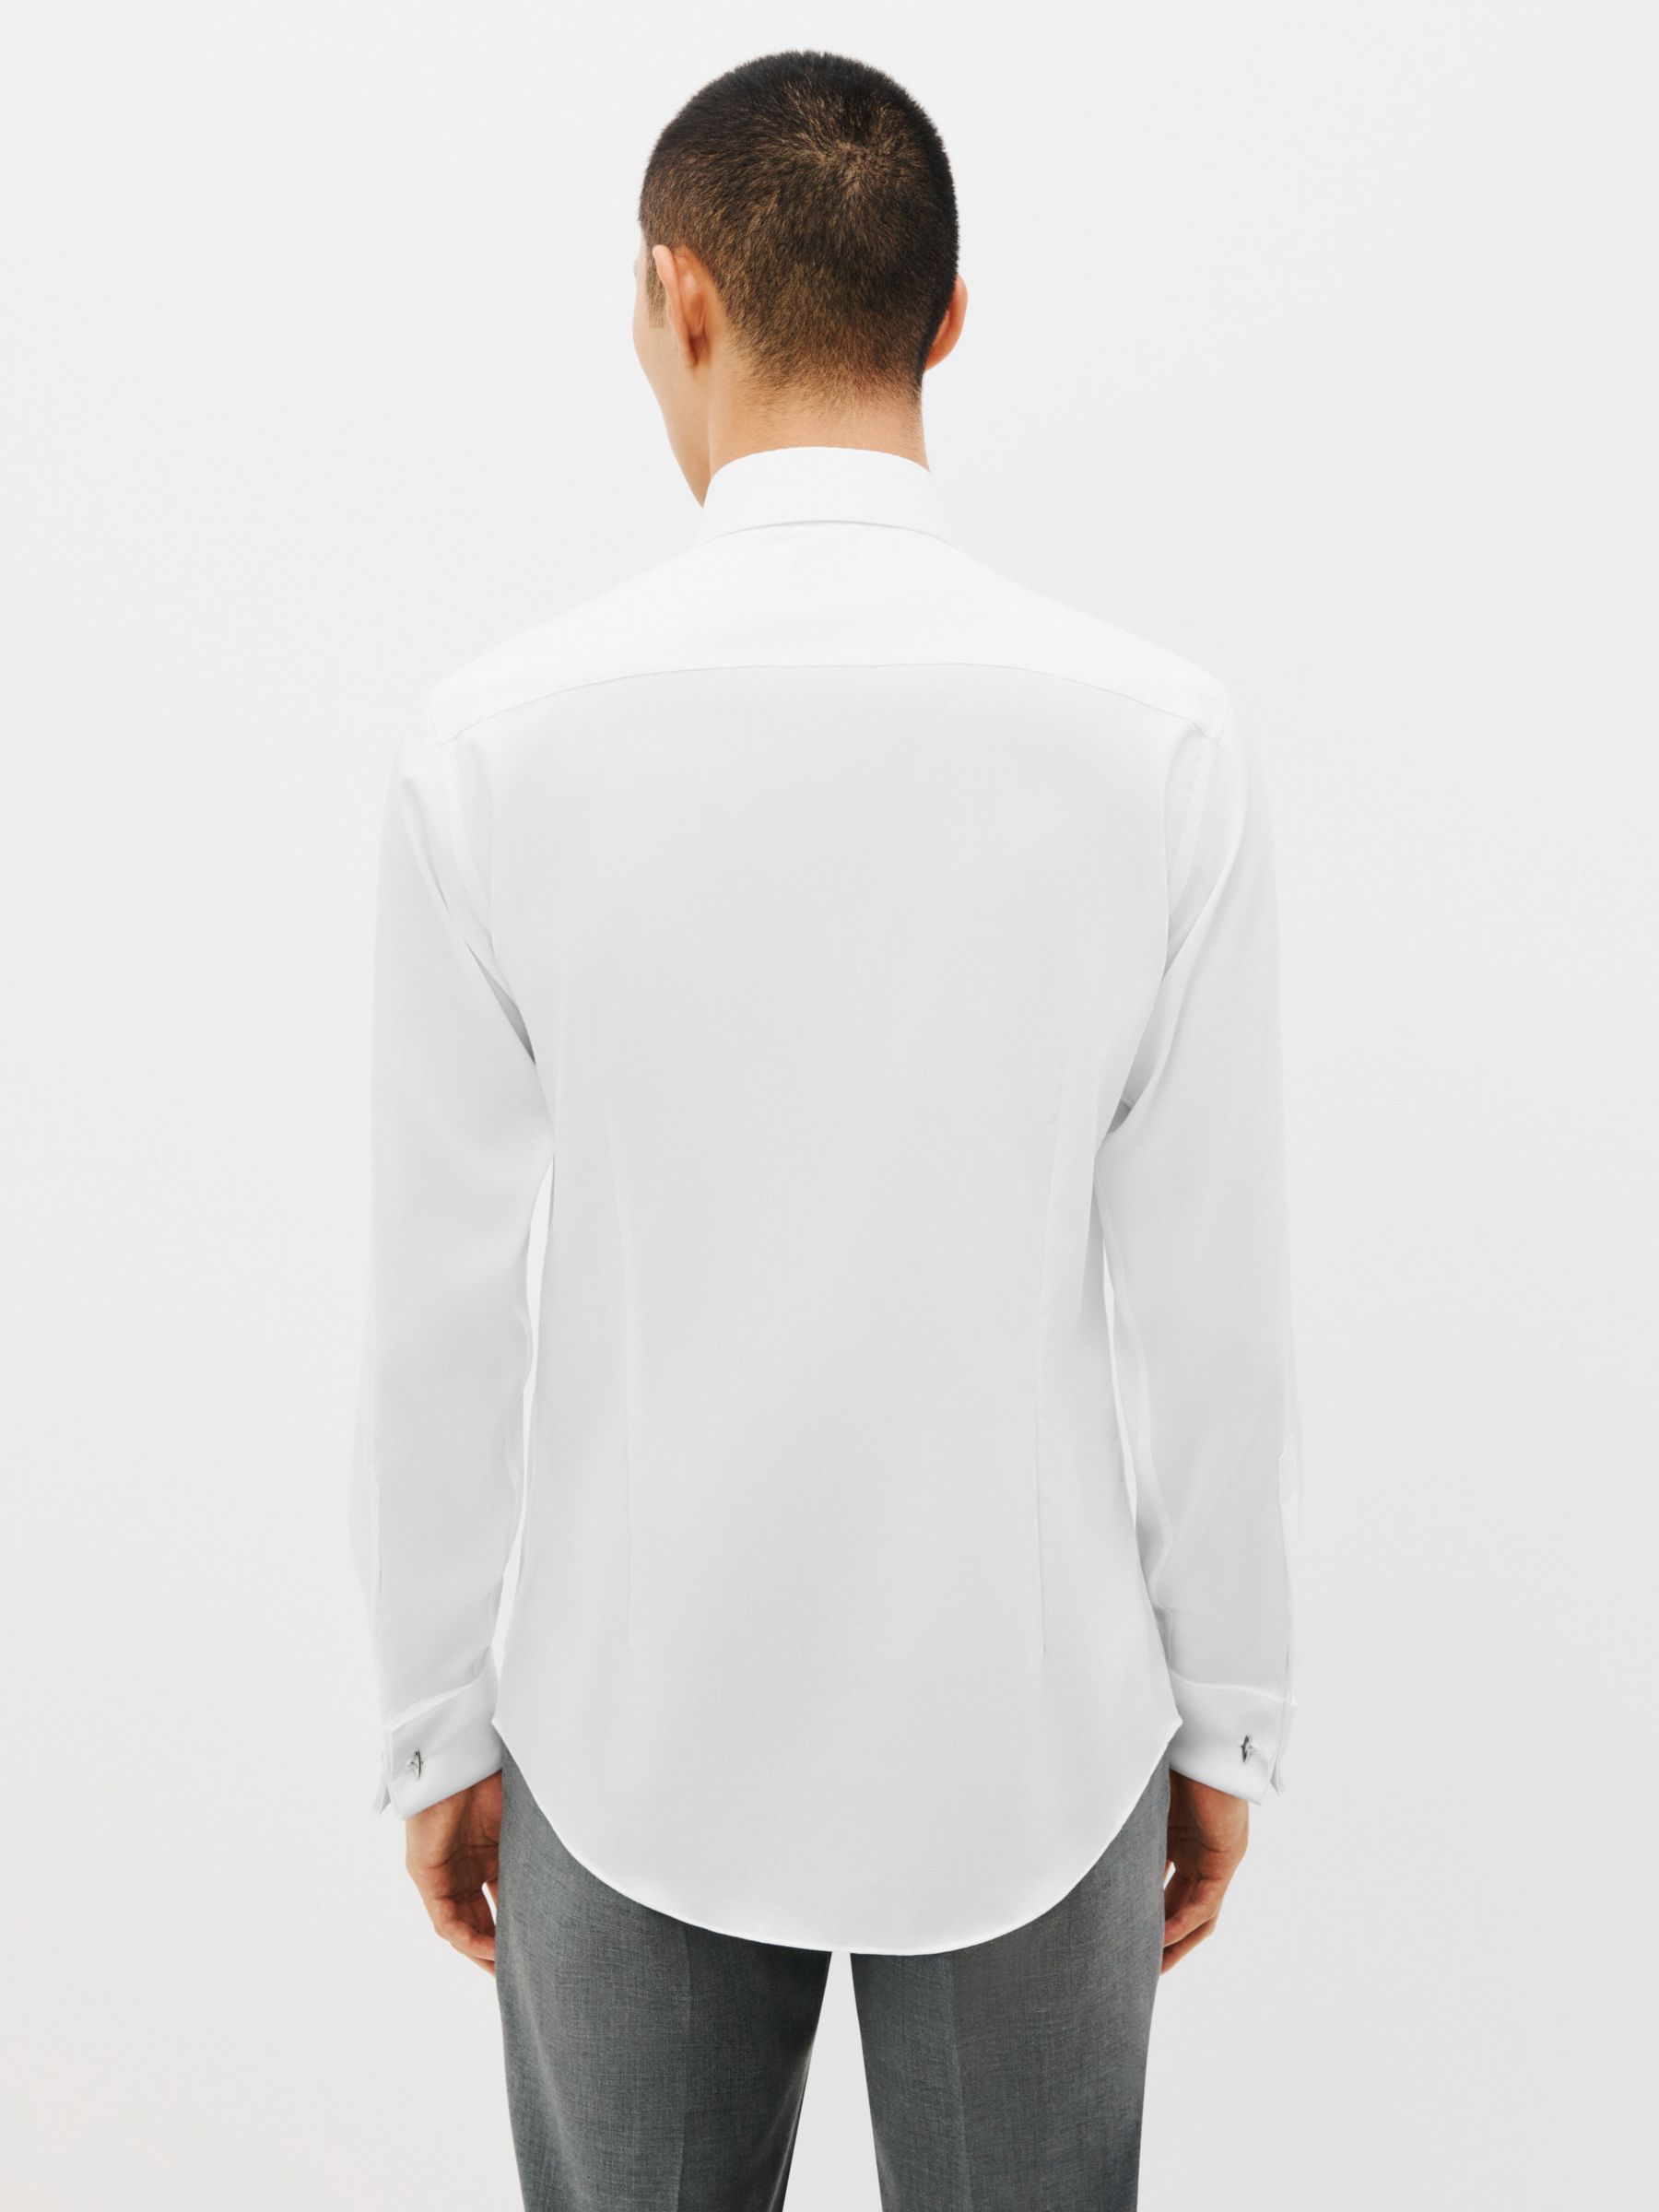 John Lewis Non Iron Twill Double Cuff Slim Fit Shirt, White, 17.5R